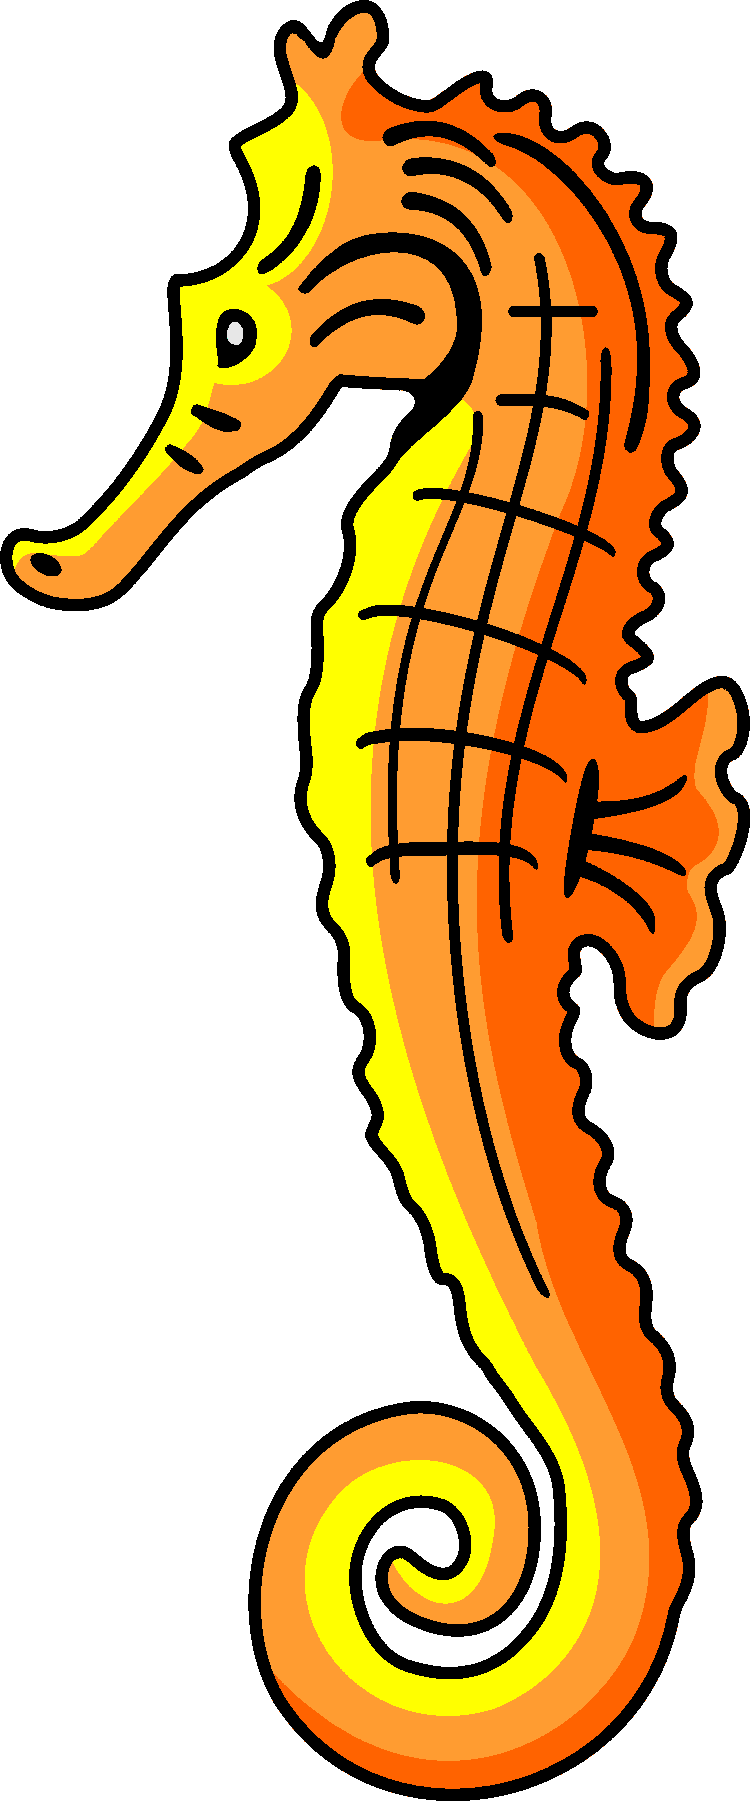 Seahorse on seahorses seahorse drawing and seahorse clip art ...